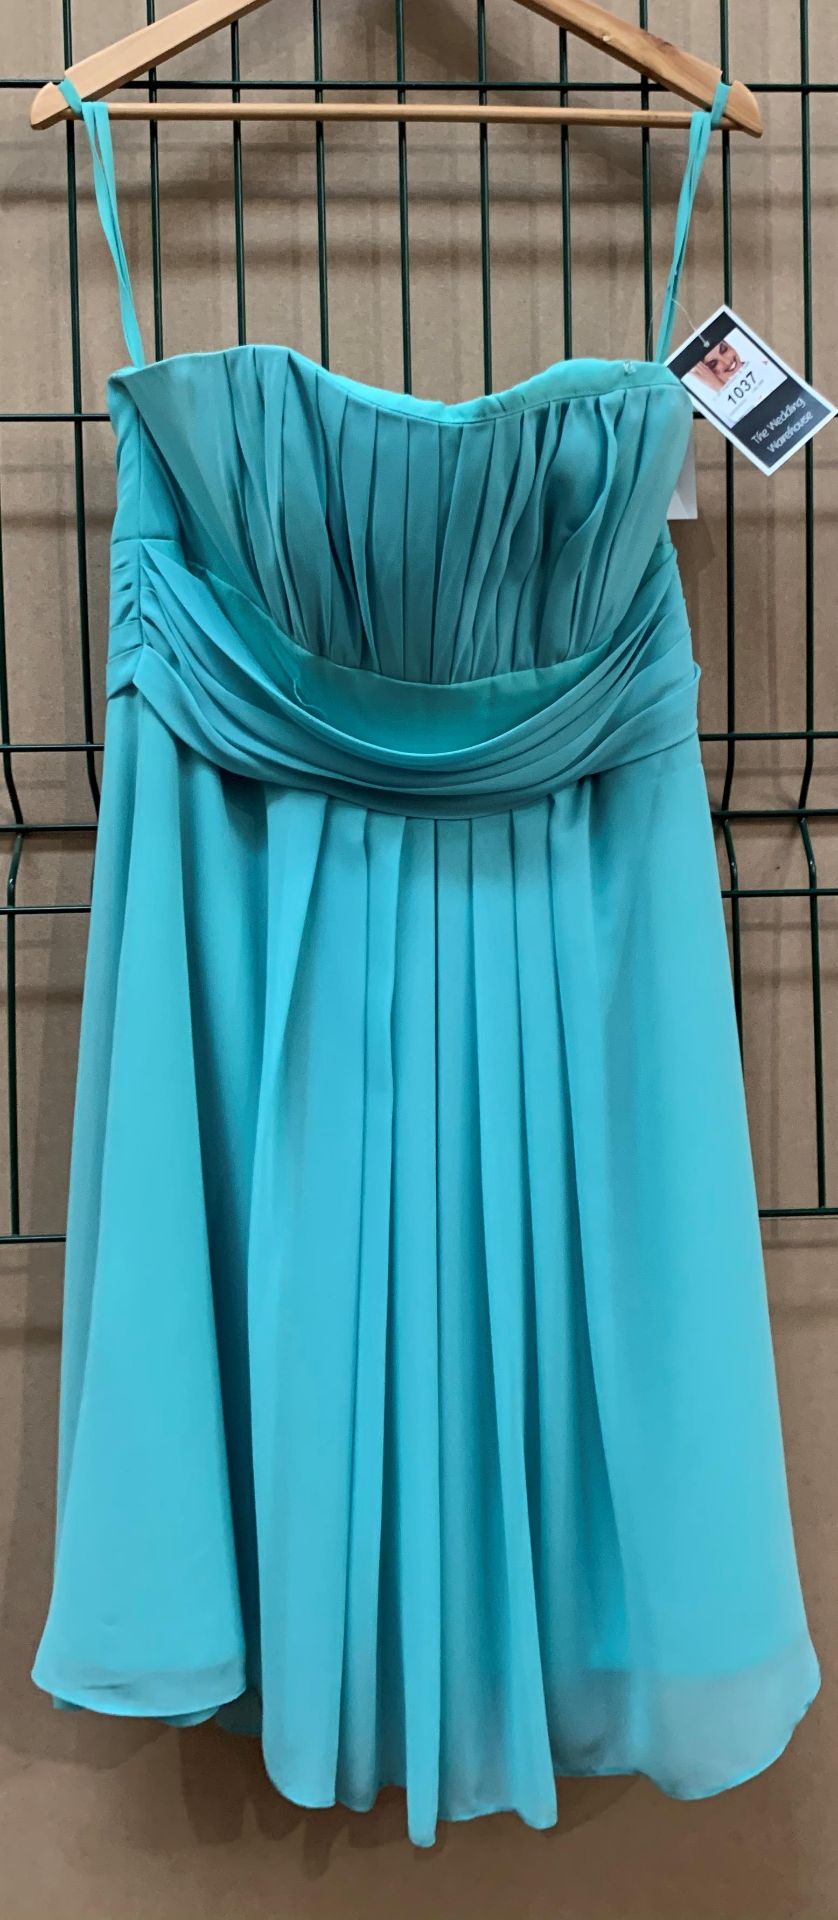 A bridesmaid/prom dress by Alexia Design